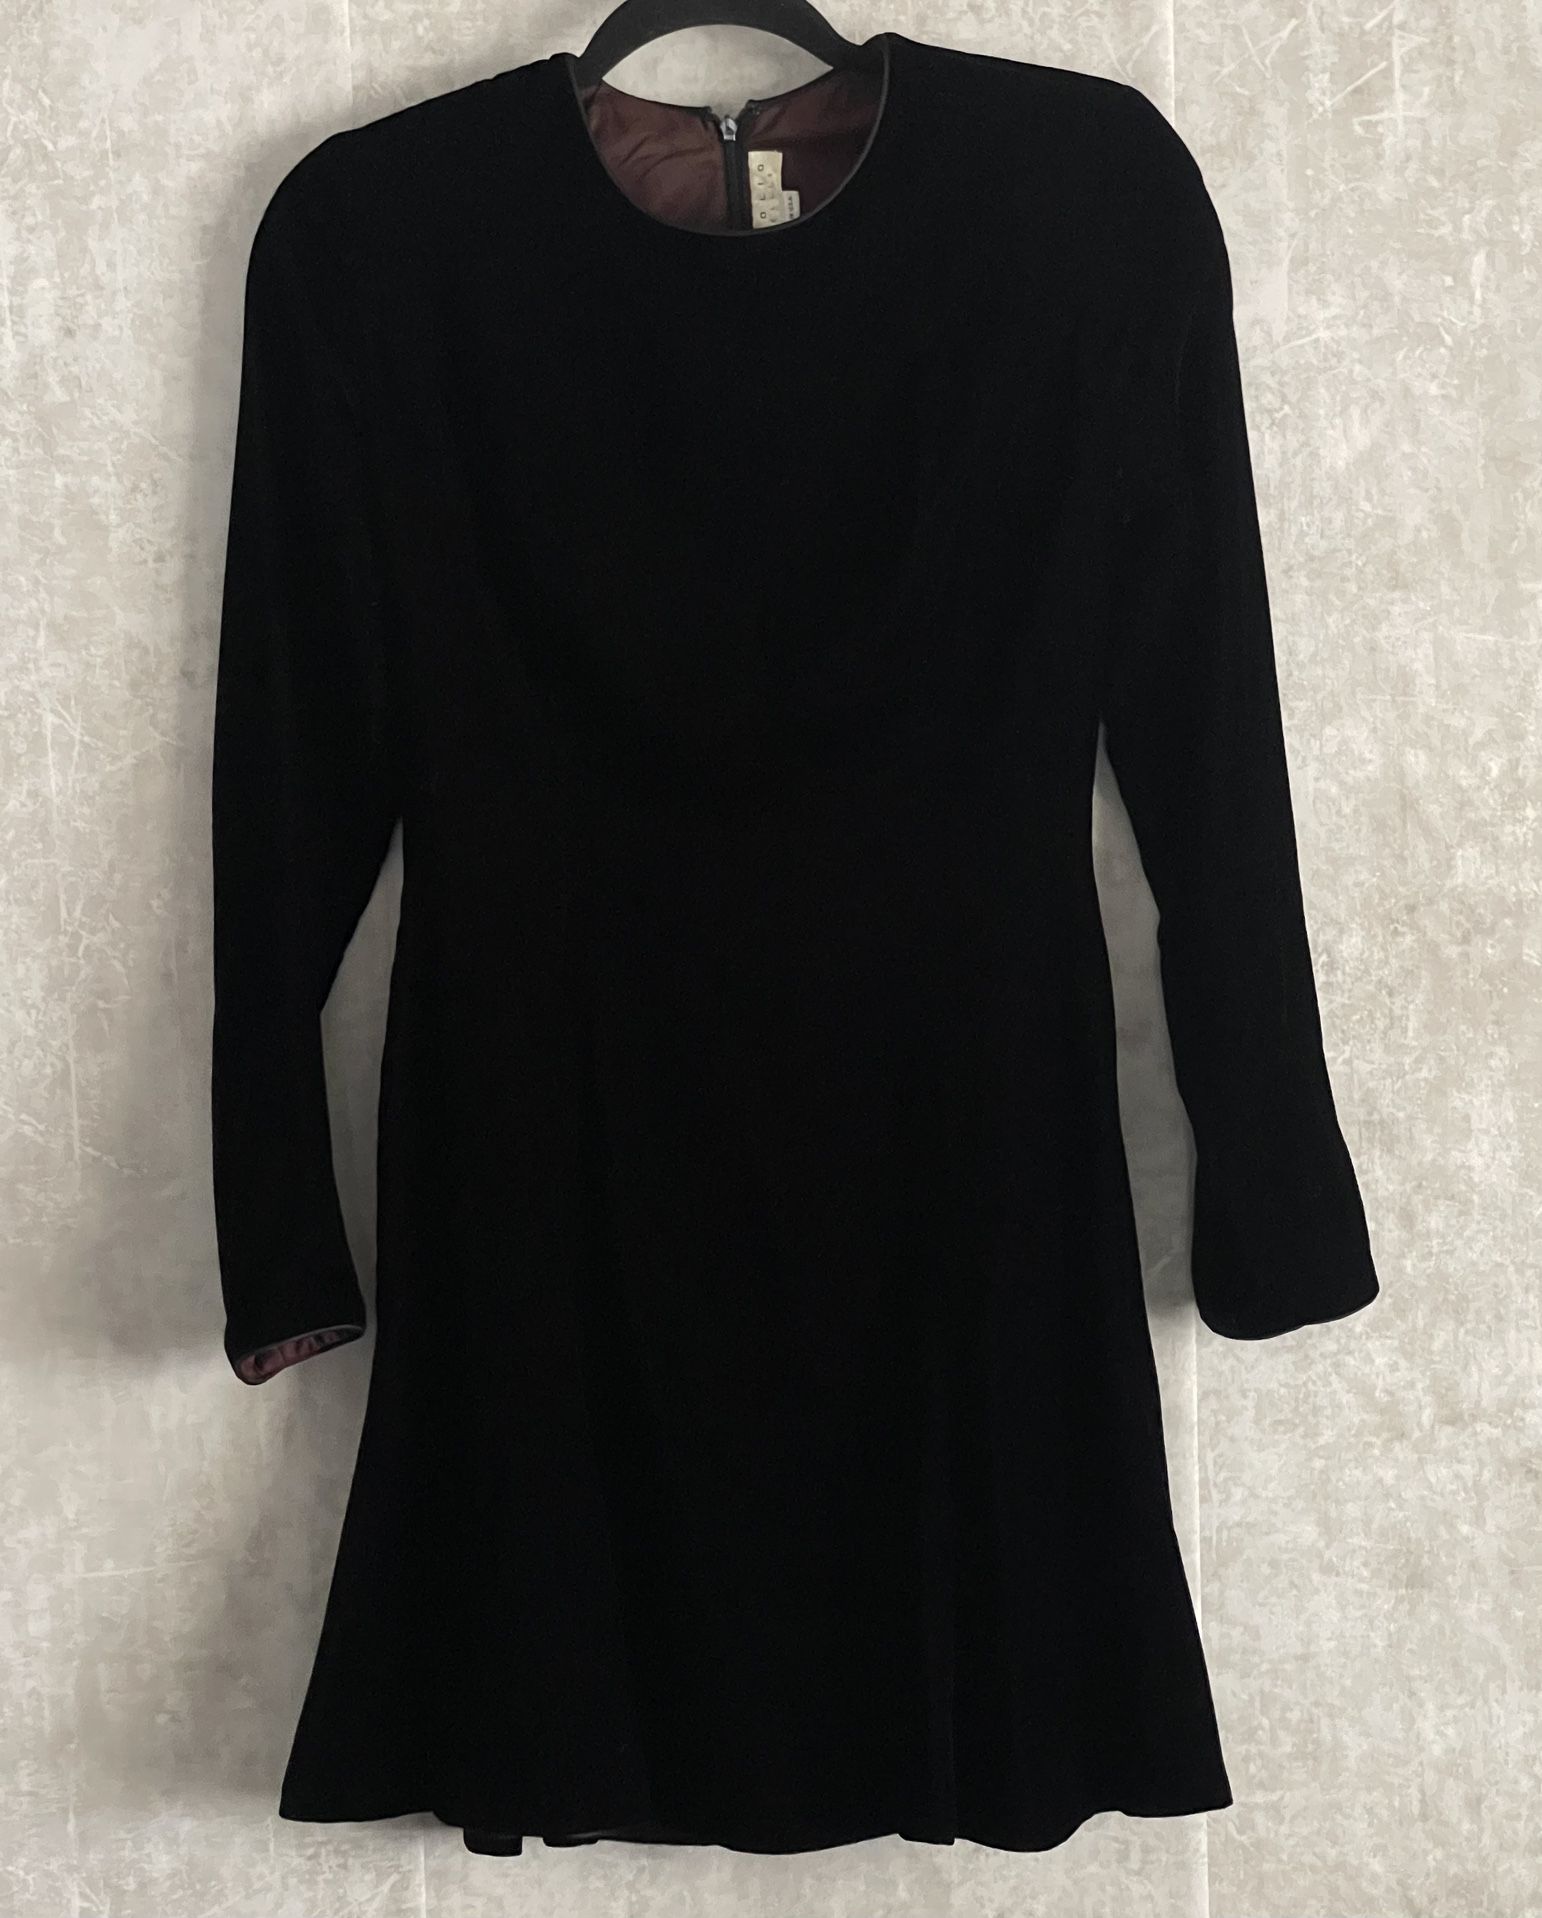 Vintage Portfolio Perry Ellis Black Velvet Women’s Long Sleeve Flared Dress Sz 4